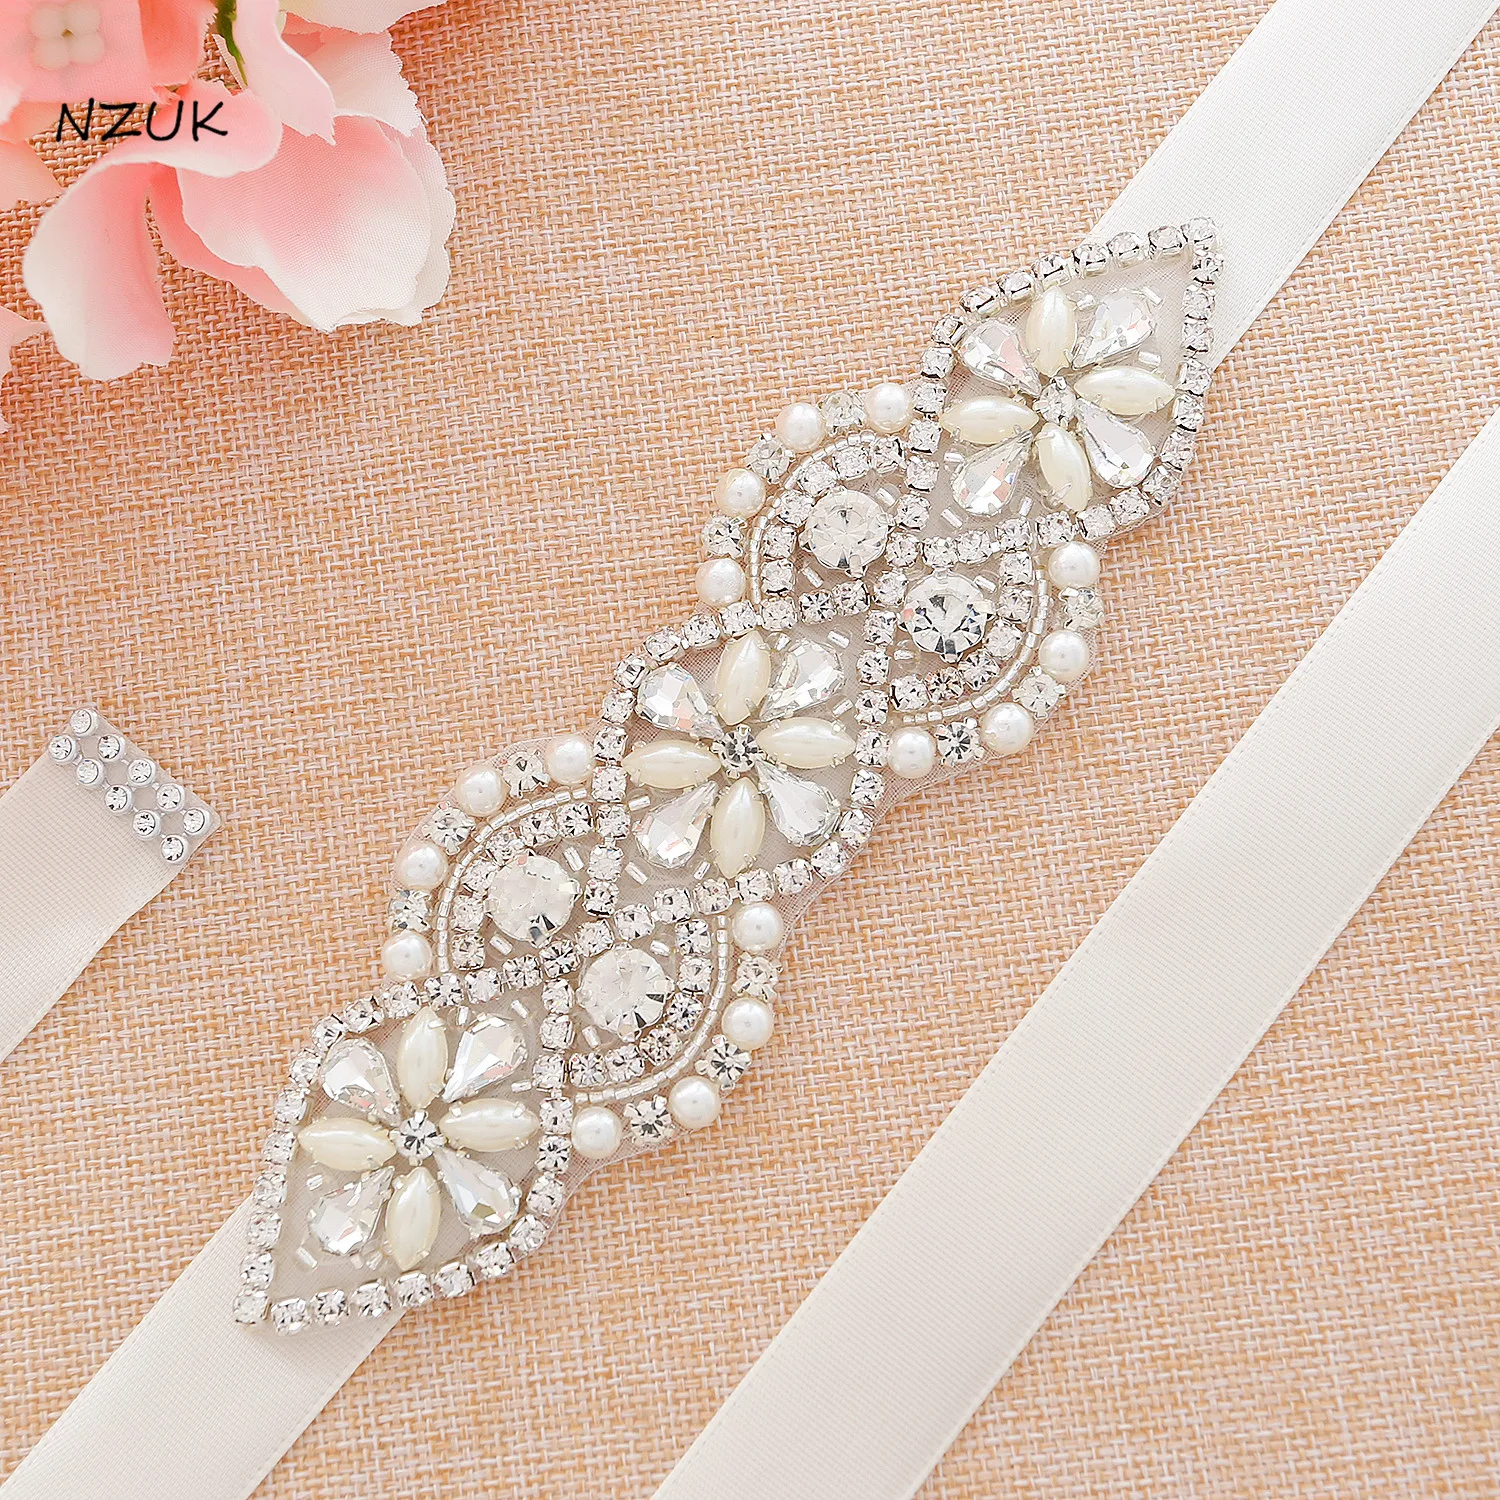 NZUK Handmade Simple Silver Rhinestones Bridal Belt Sash Pearls Wedding Belt Crystal Bridal Sash For Wedding Dresses 